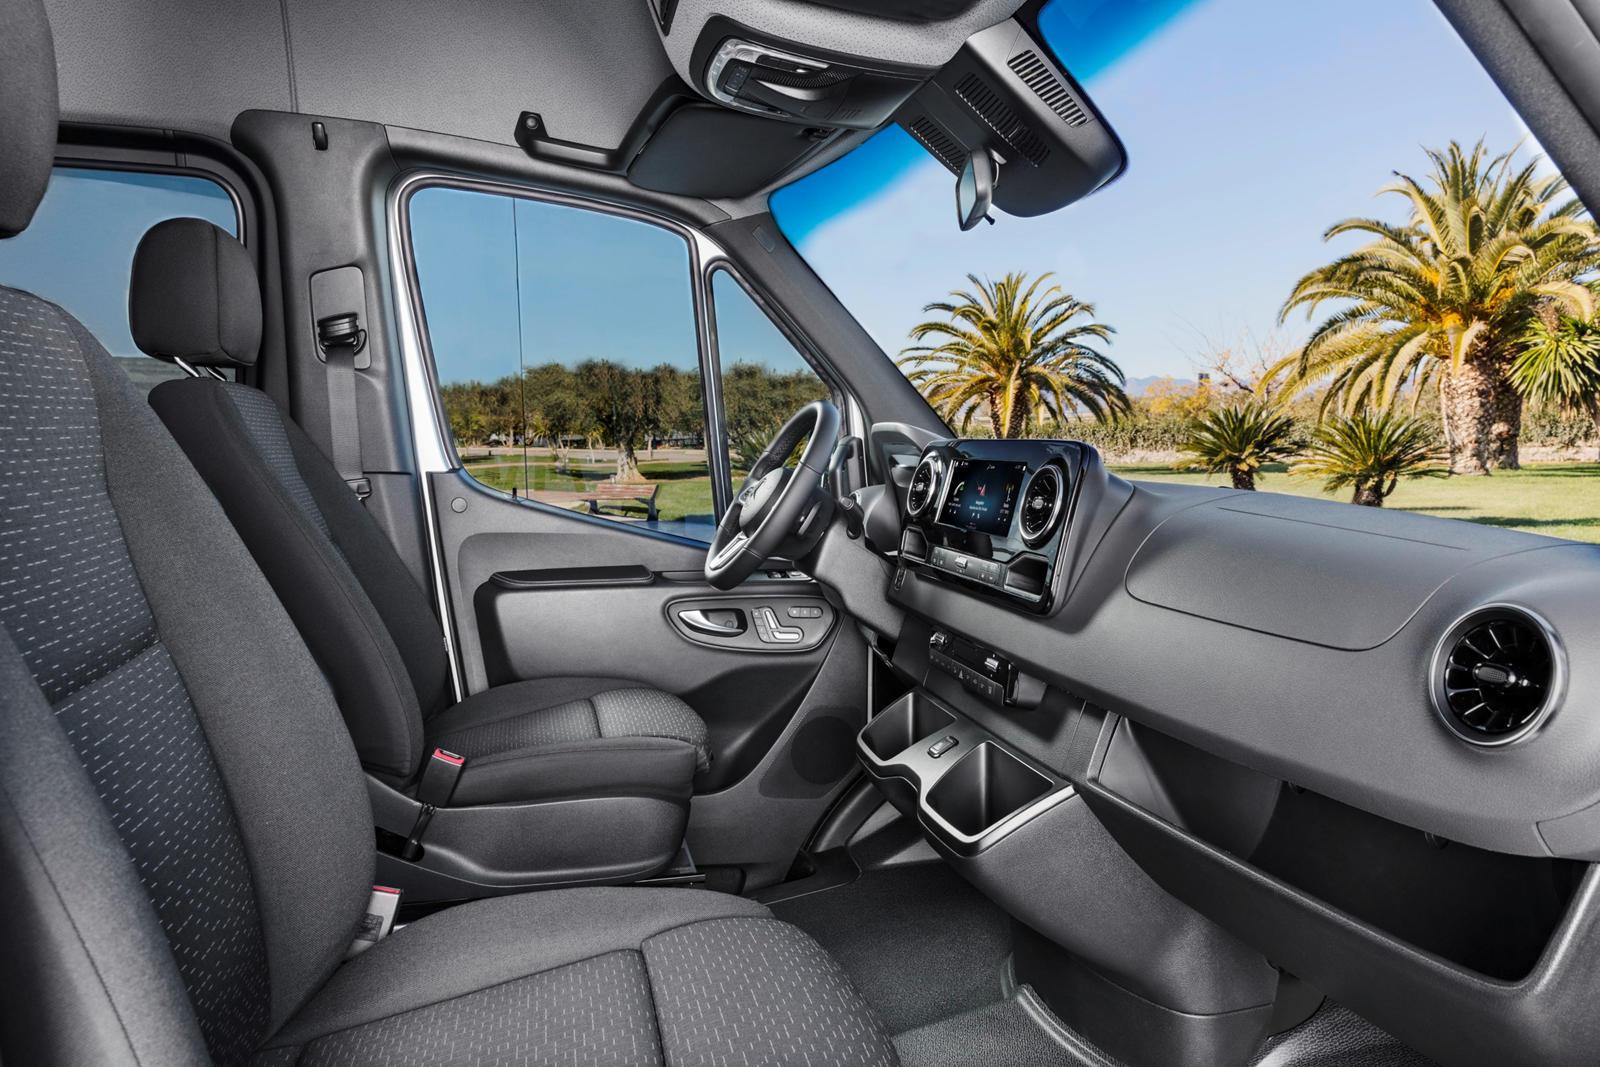 2020 Mercedes-Benz Sprinter Interior Features & Dimensions